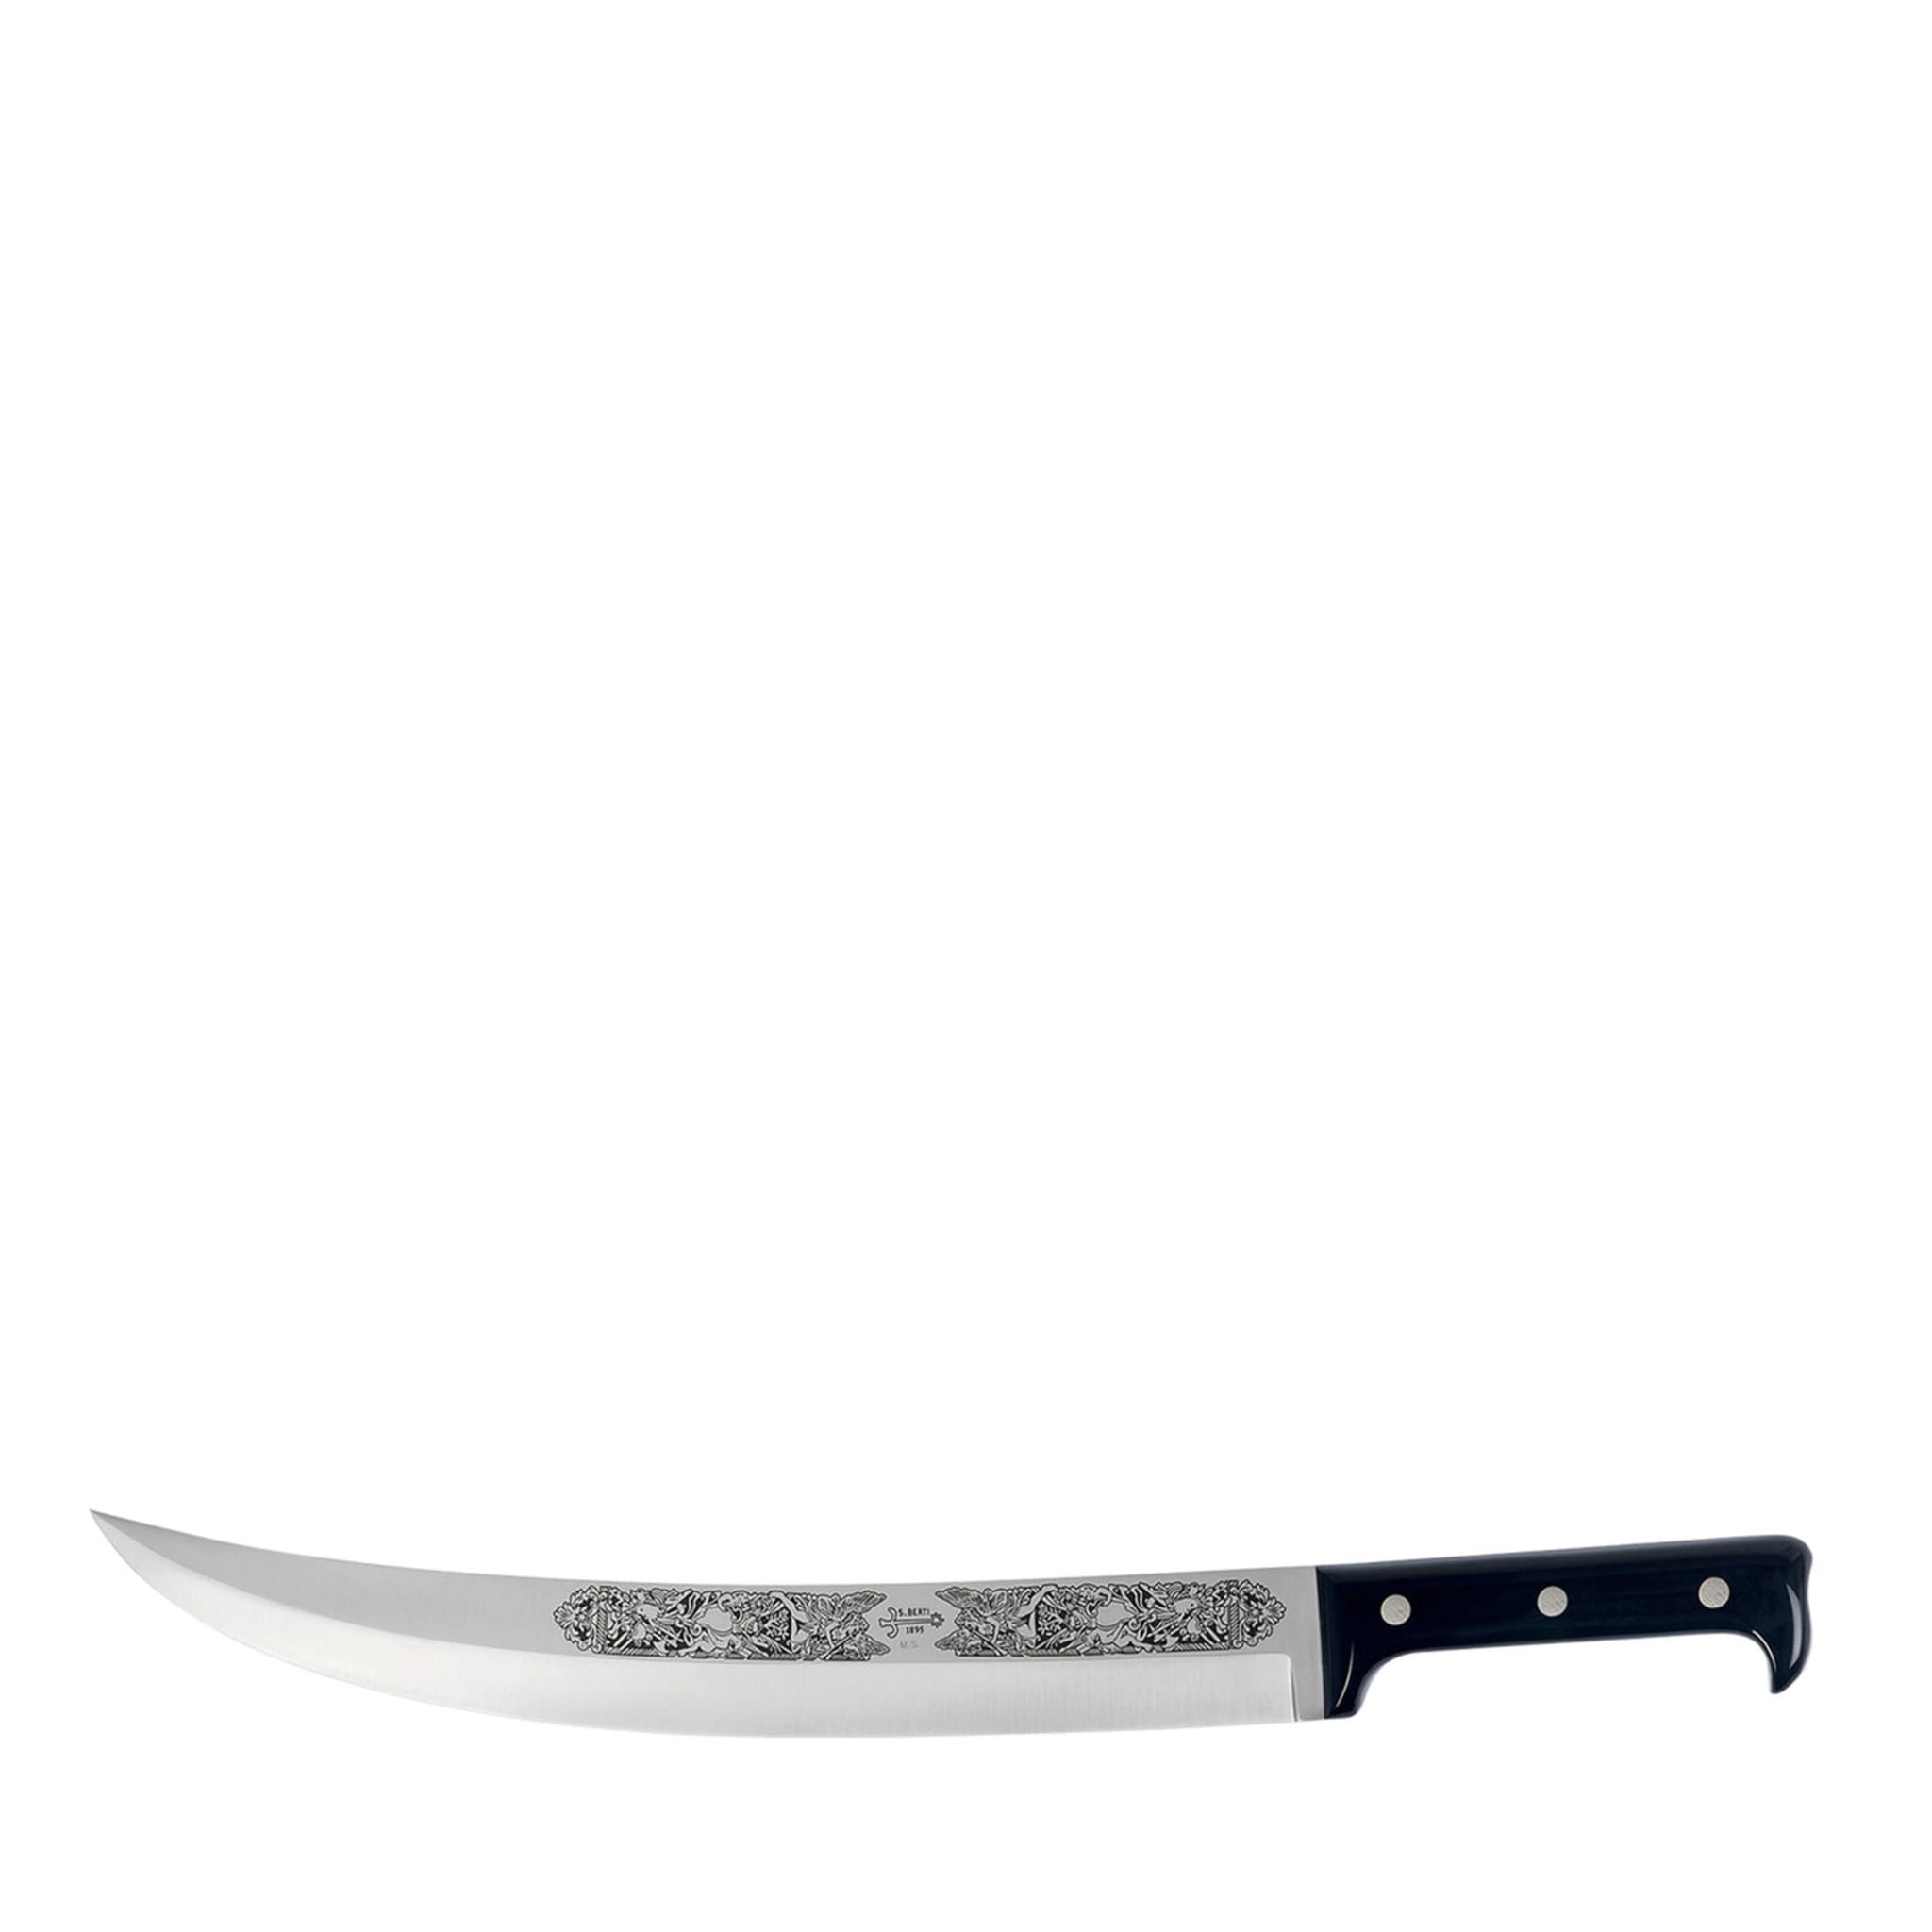 Saber Knife with Black Plexiglass Handle - Main view